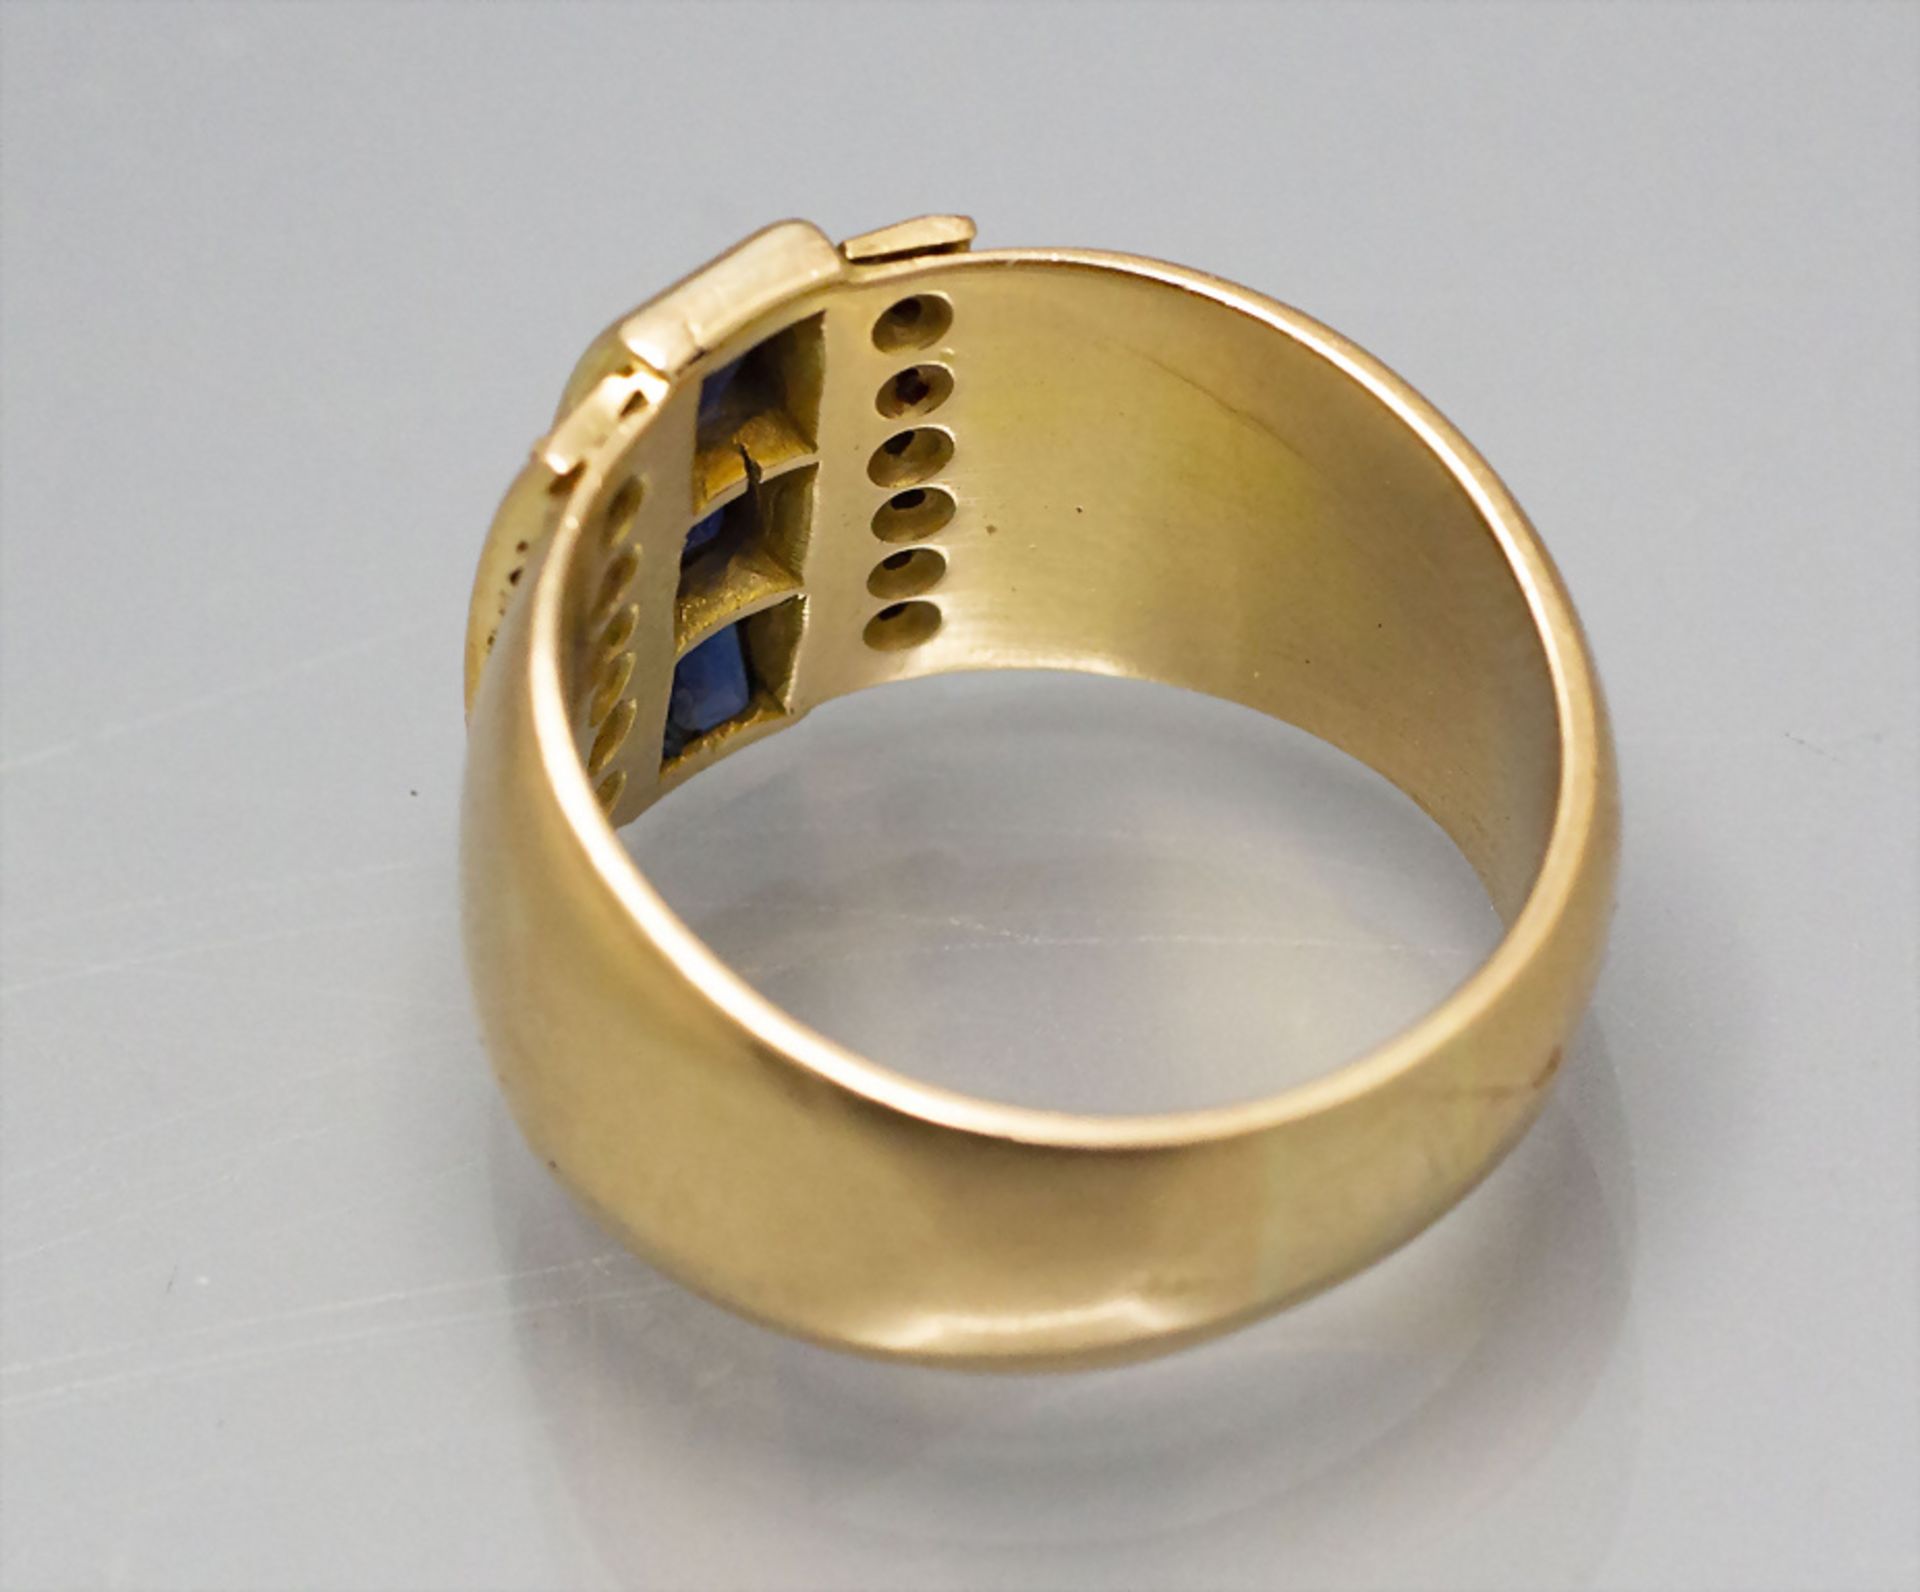 Damenring mit Saphiren und Brillanten / A ladies 18 ct gold ring with diamonds and sapphires - Image 2 of 2